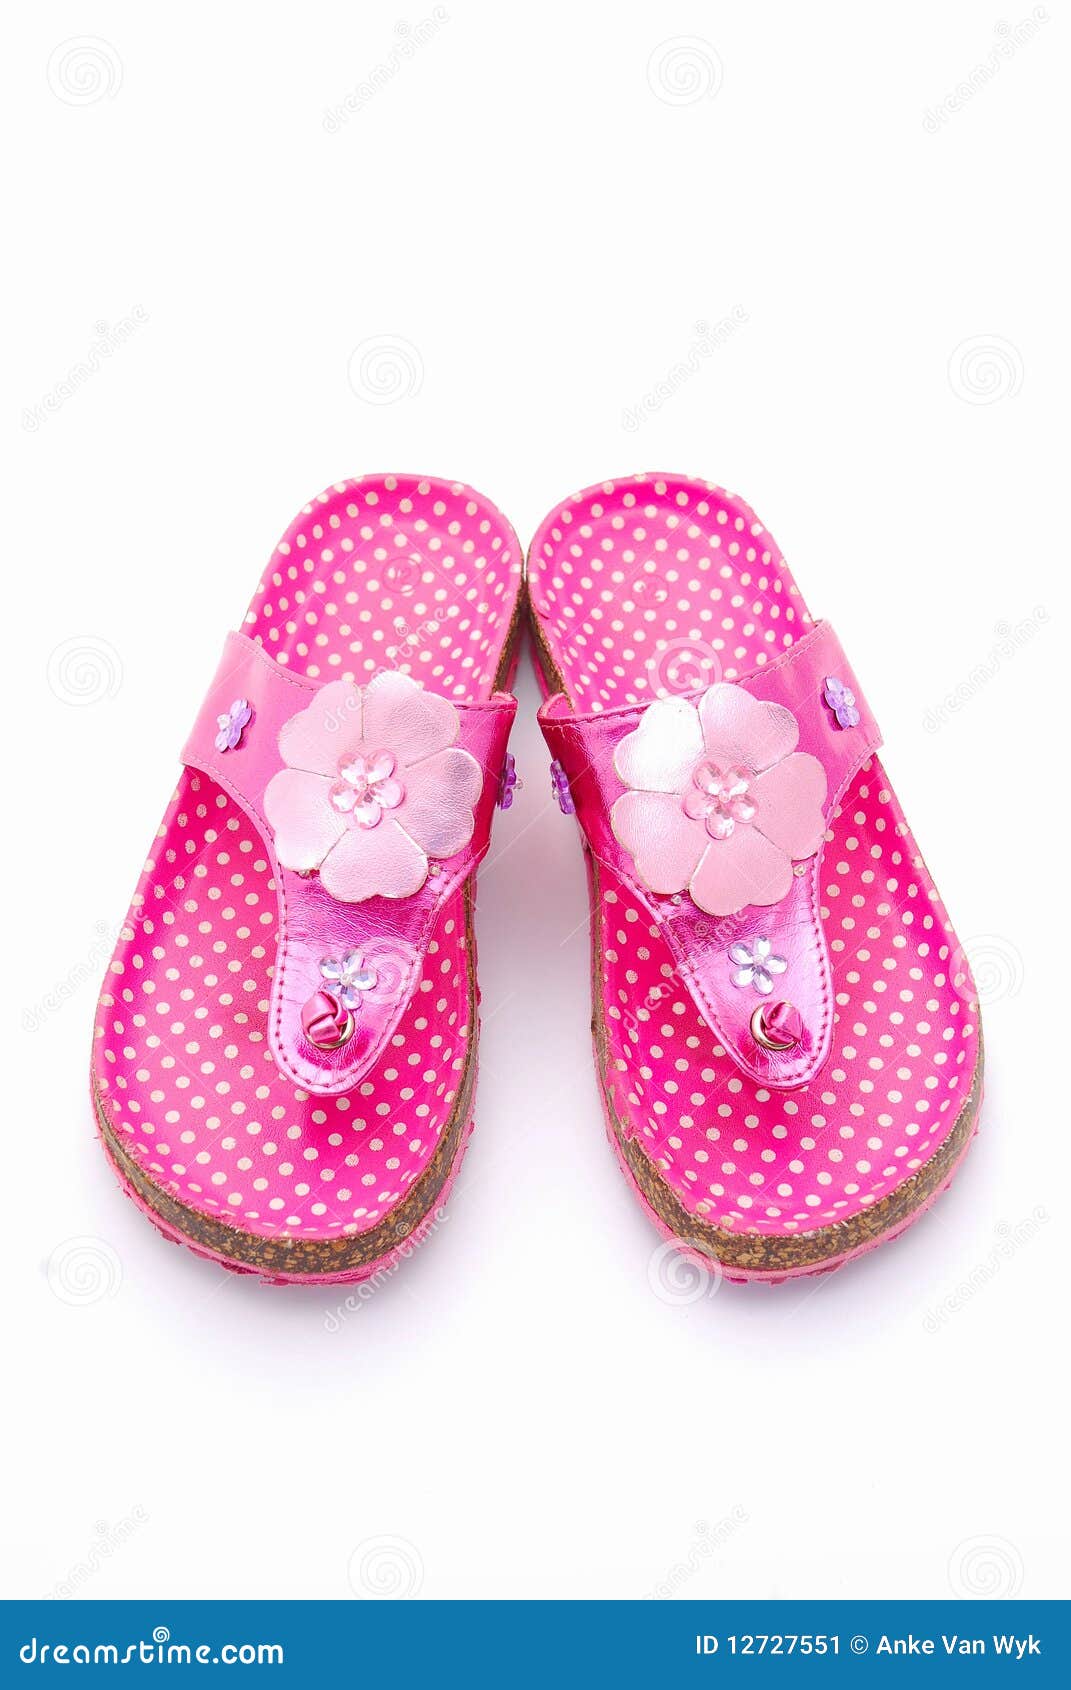 Chote Baccho Ki Xxx Videos - Pink sandals stock image. Image of studio, dots, slipper - 12727551